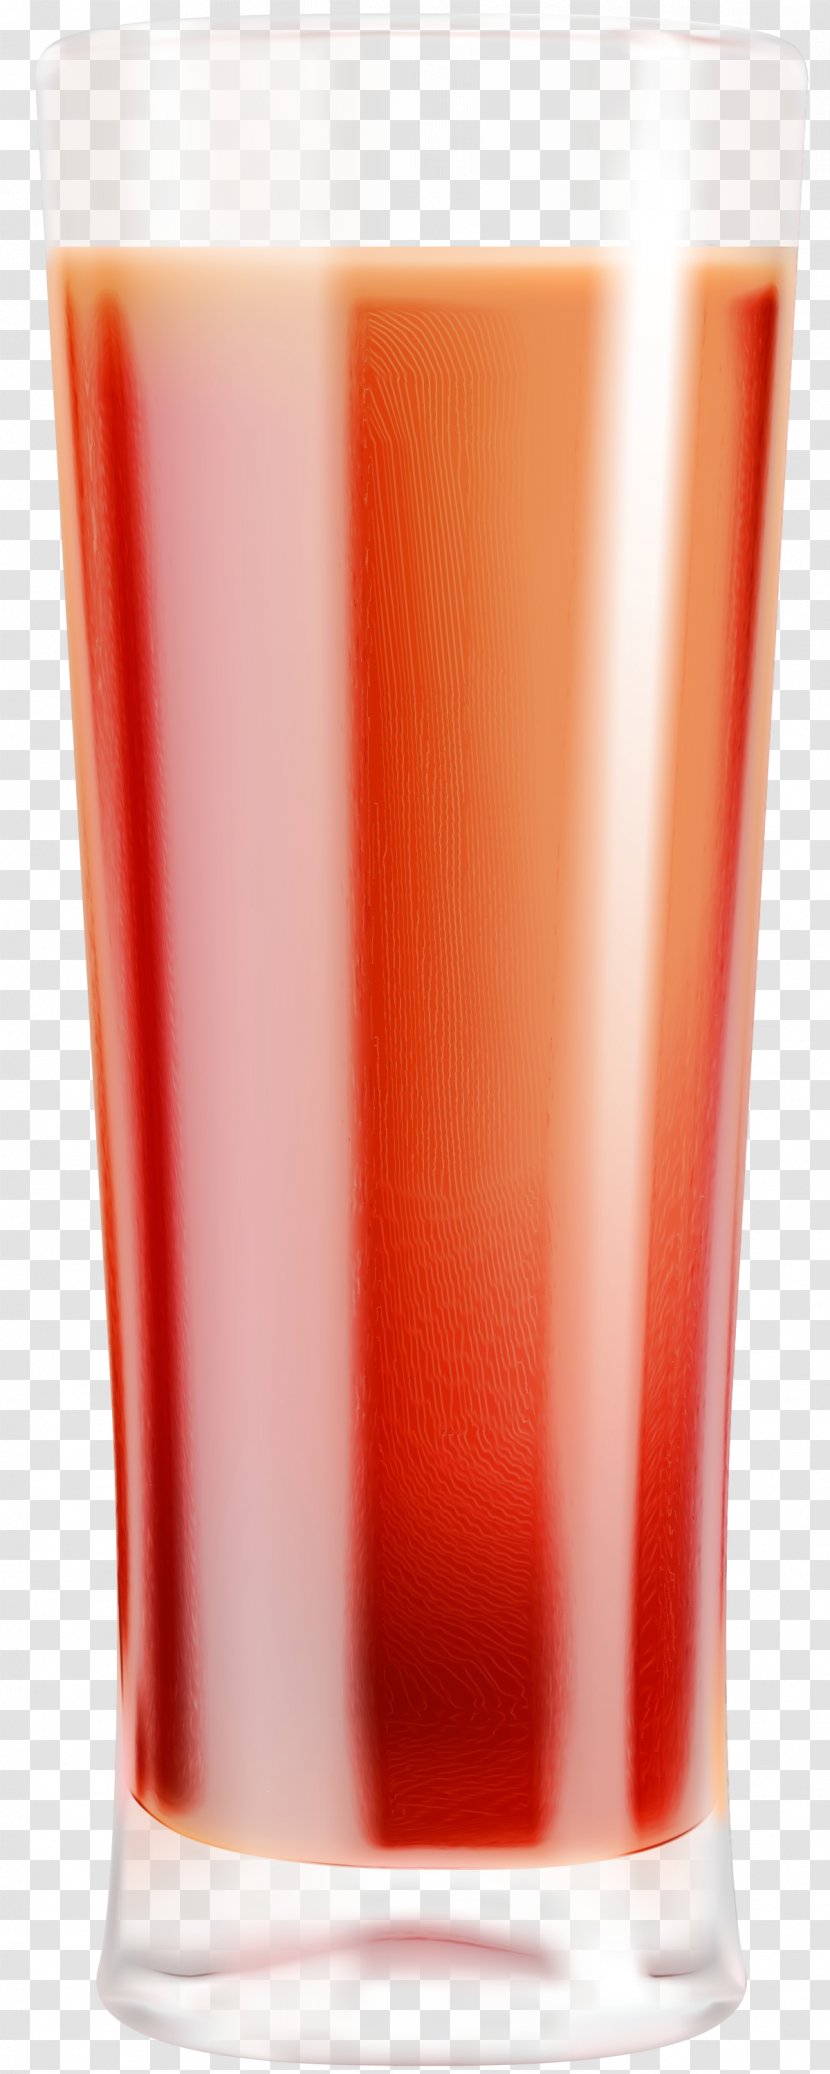 Material Property Tumbler Drinkware Cylinder Drink - Pint Glass Transparent PNG